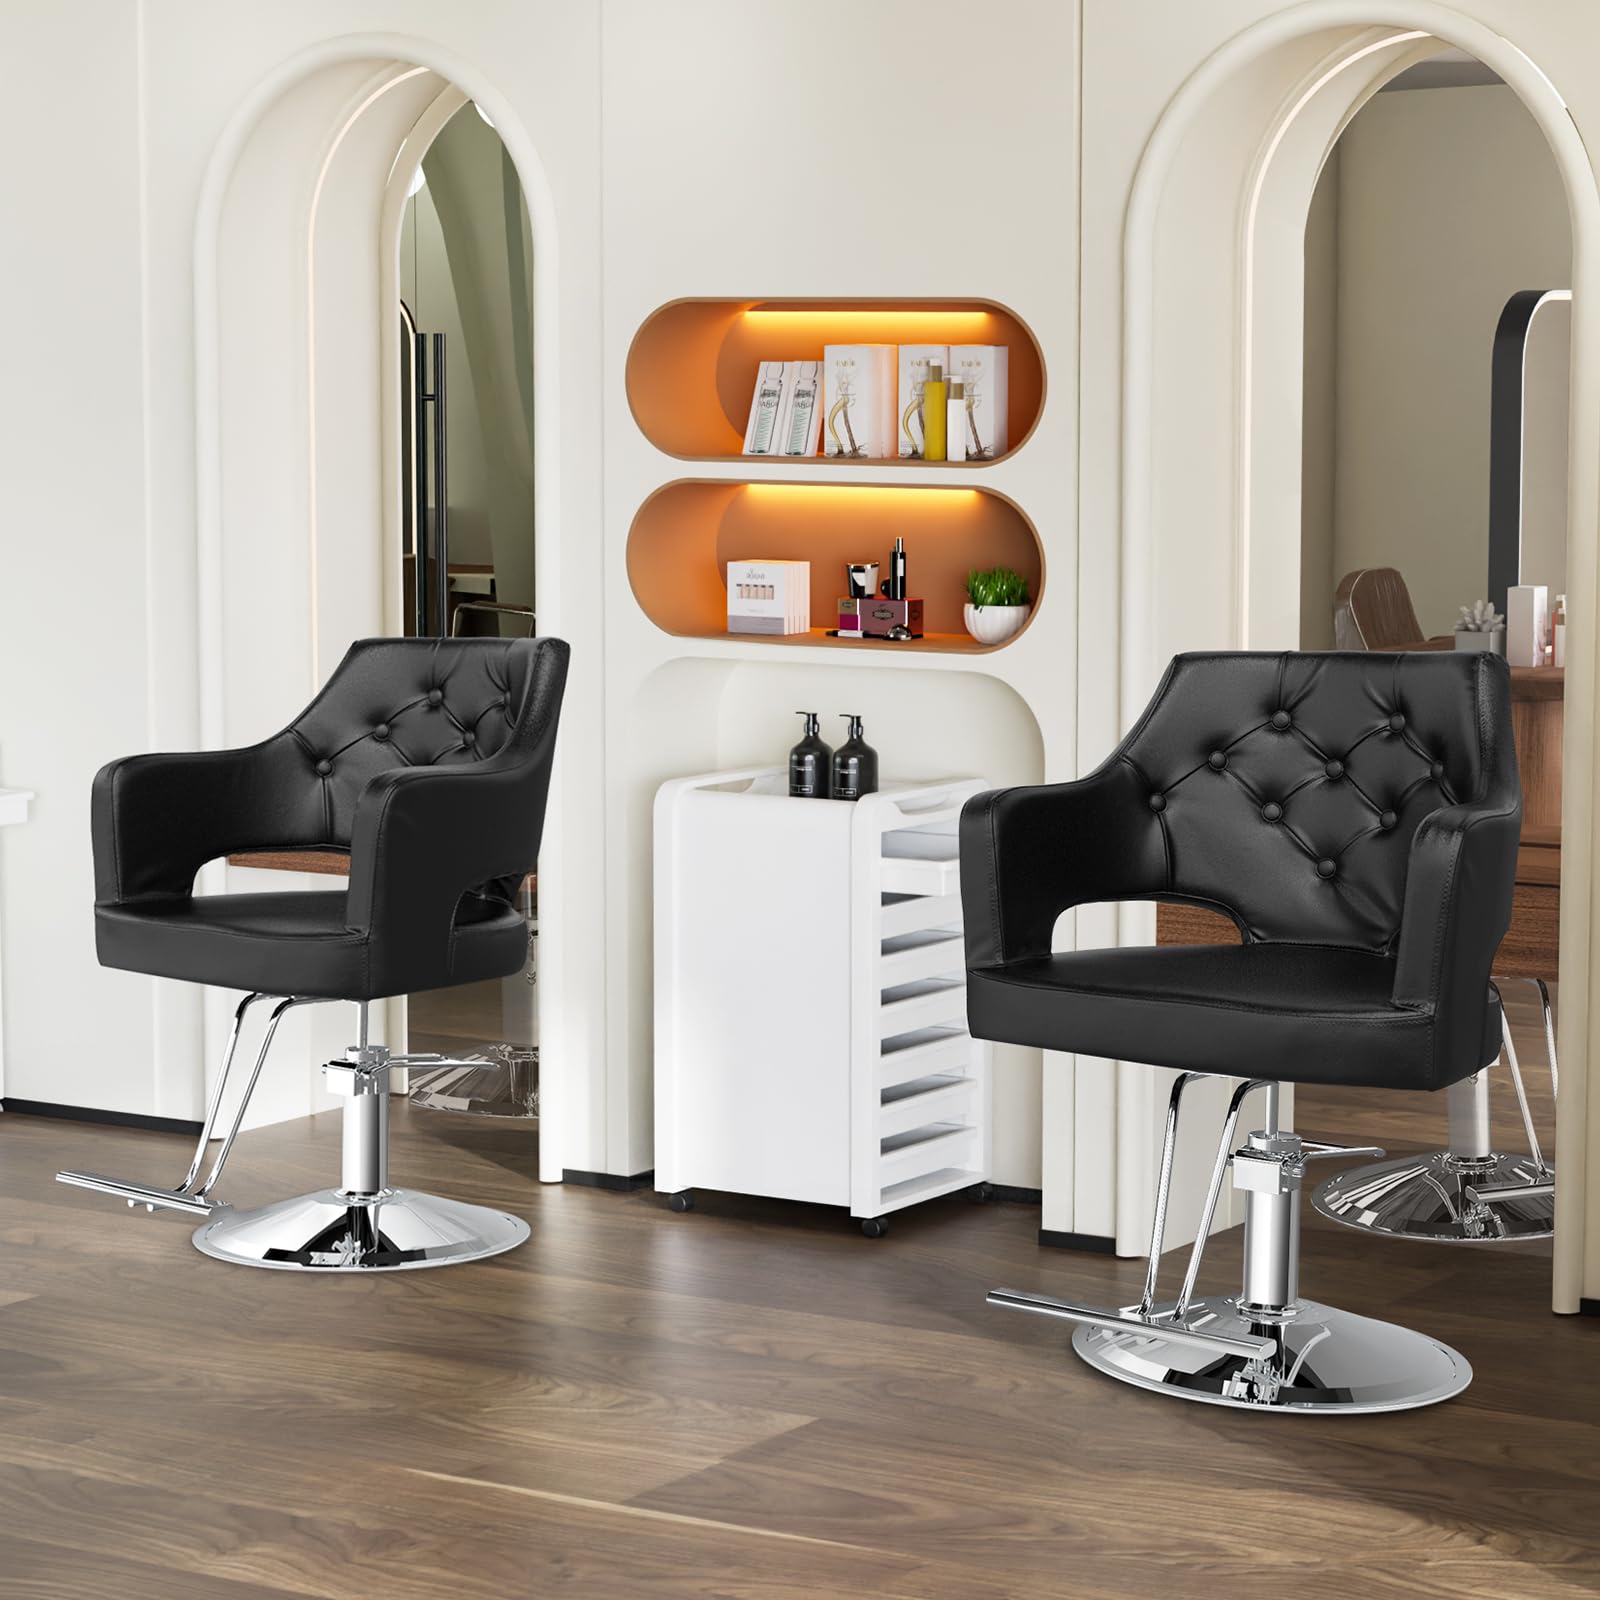 OmySalon SC2501 Sleek Heavy Duty Hydraulic 360-Degree Swivel Hair Stylist Salon Chair